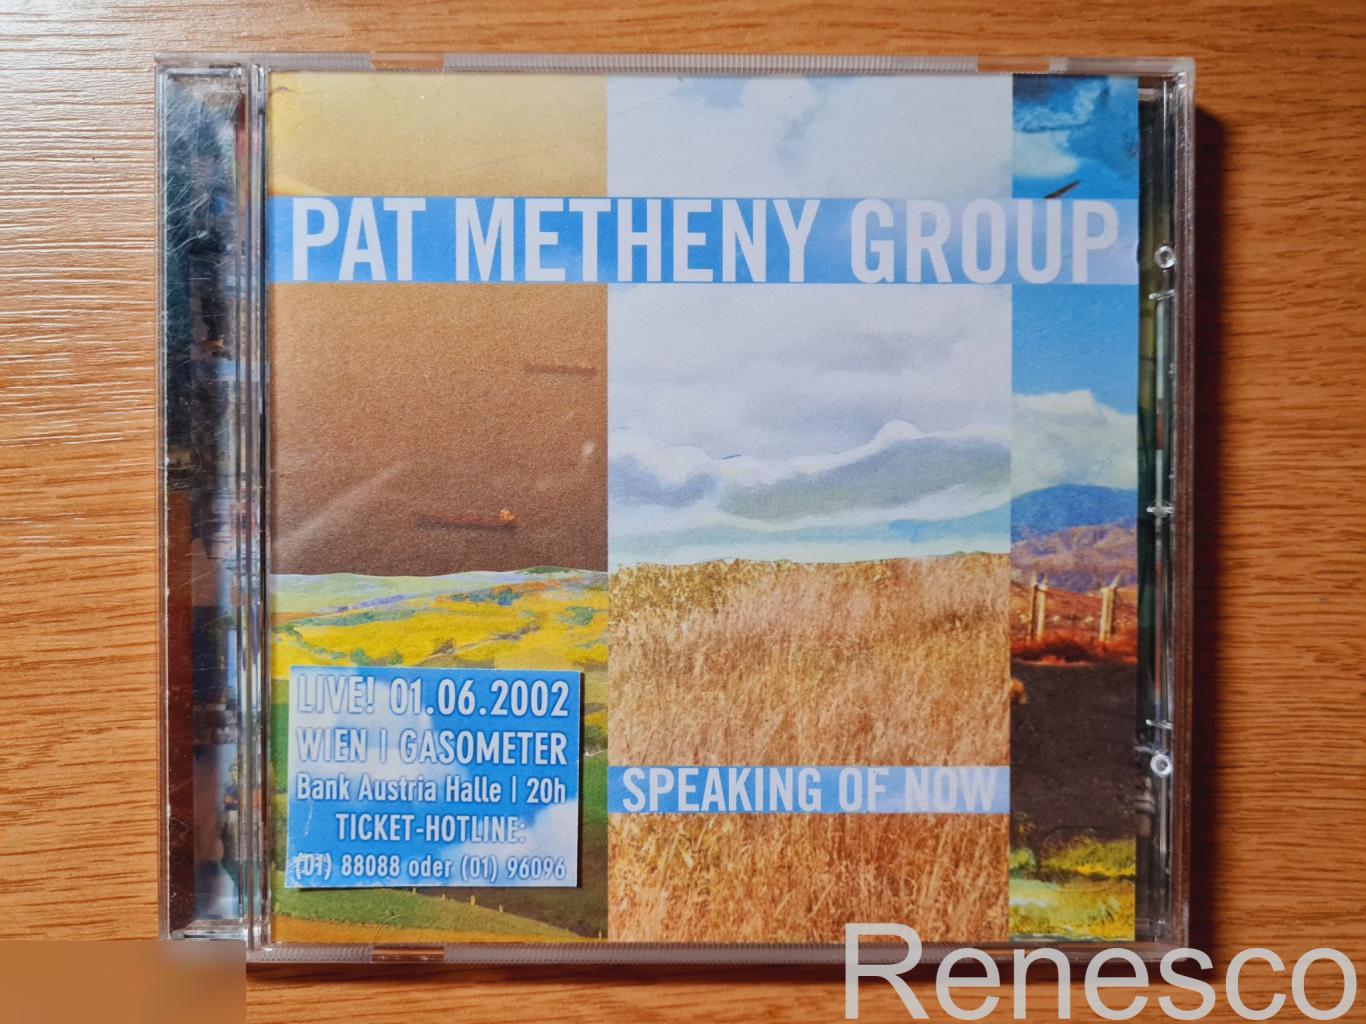 Pat Metheny Group – Speaking Of Now (Germany) (2002)